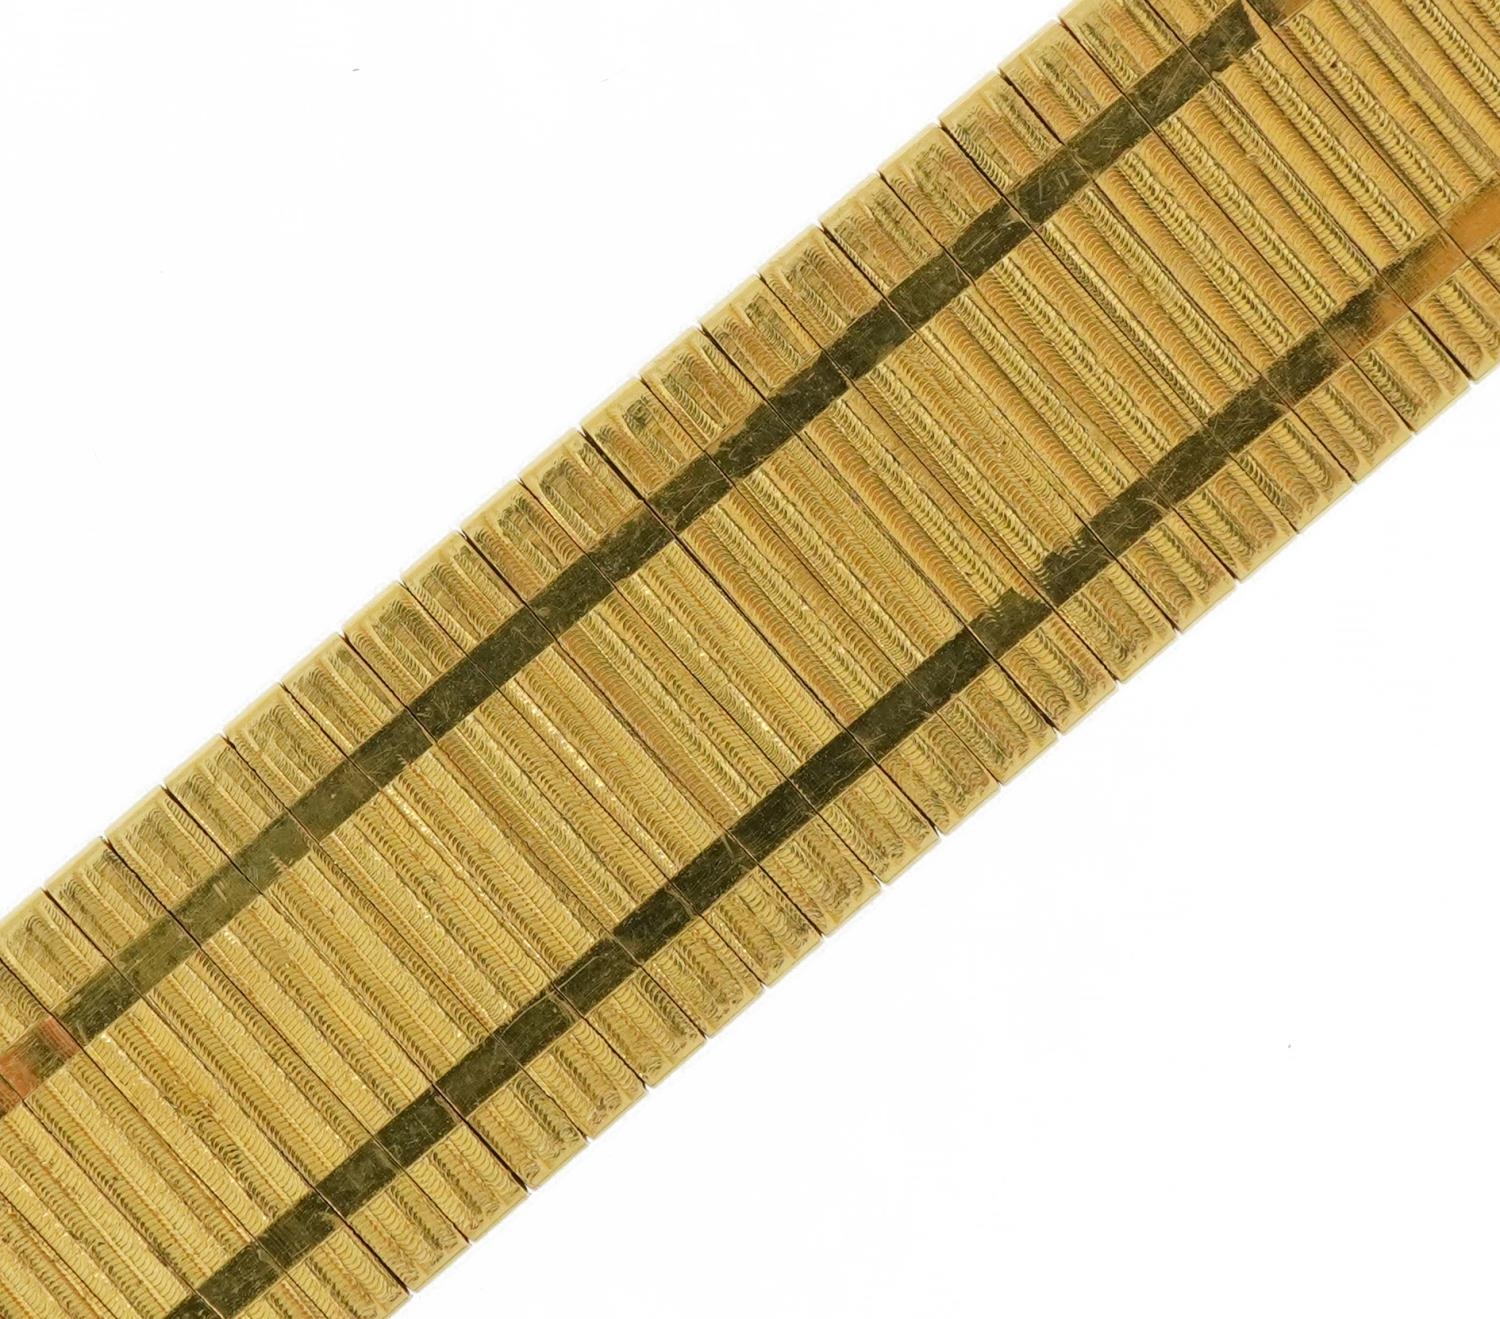 18ct gold stylish flattened link bracelet, 18cm in length, 42.2g